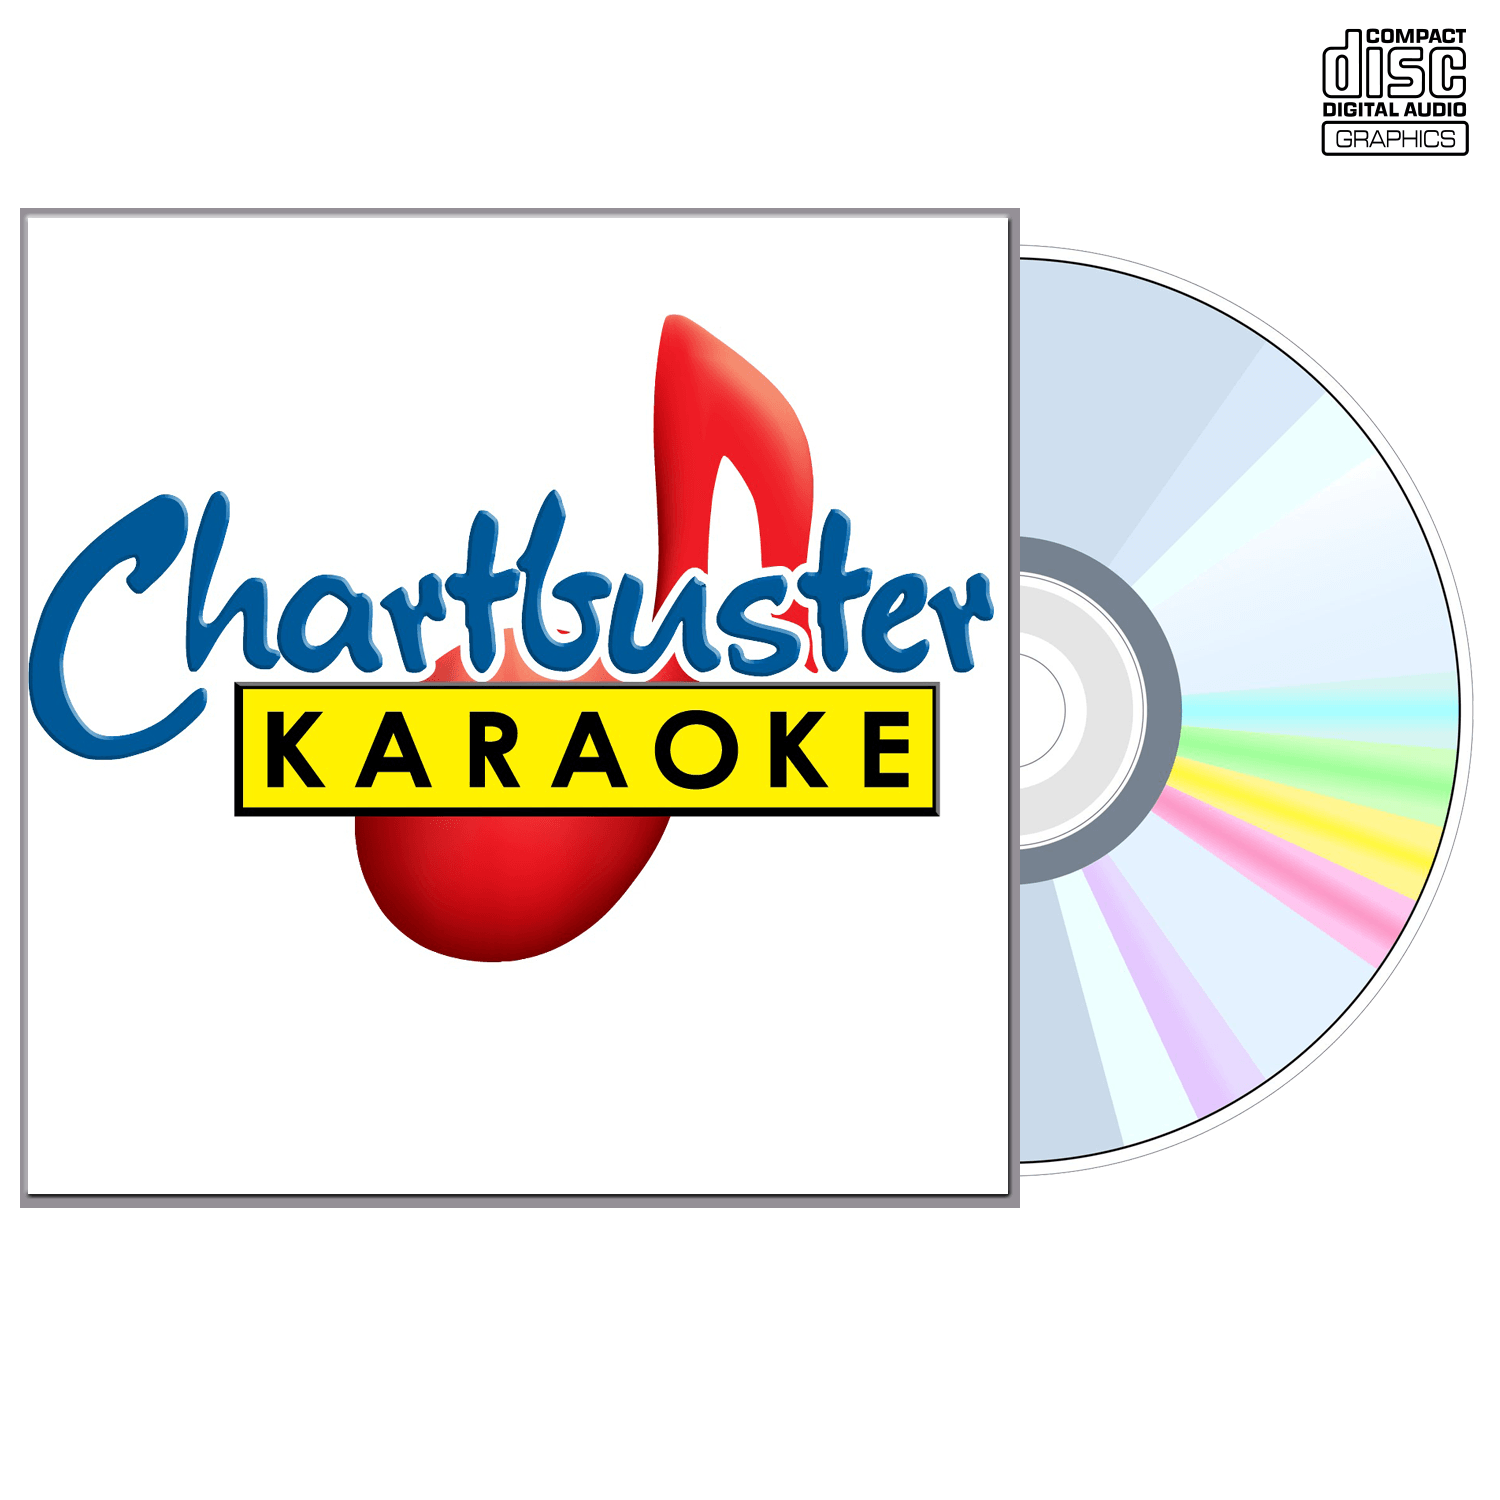 Best Of Michael Jackson - CD+G - Chartbuster Karaoke - Karaoke Home Entertainment